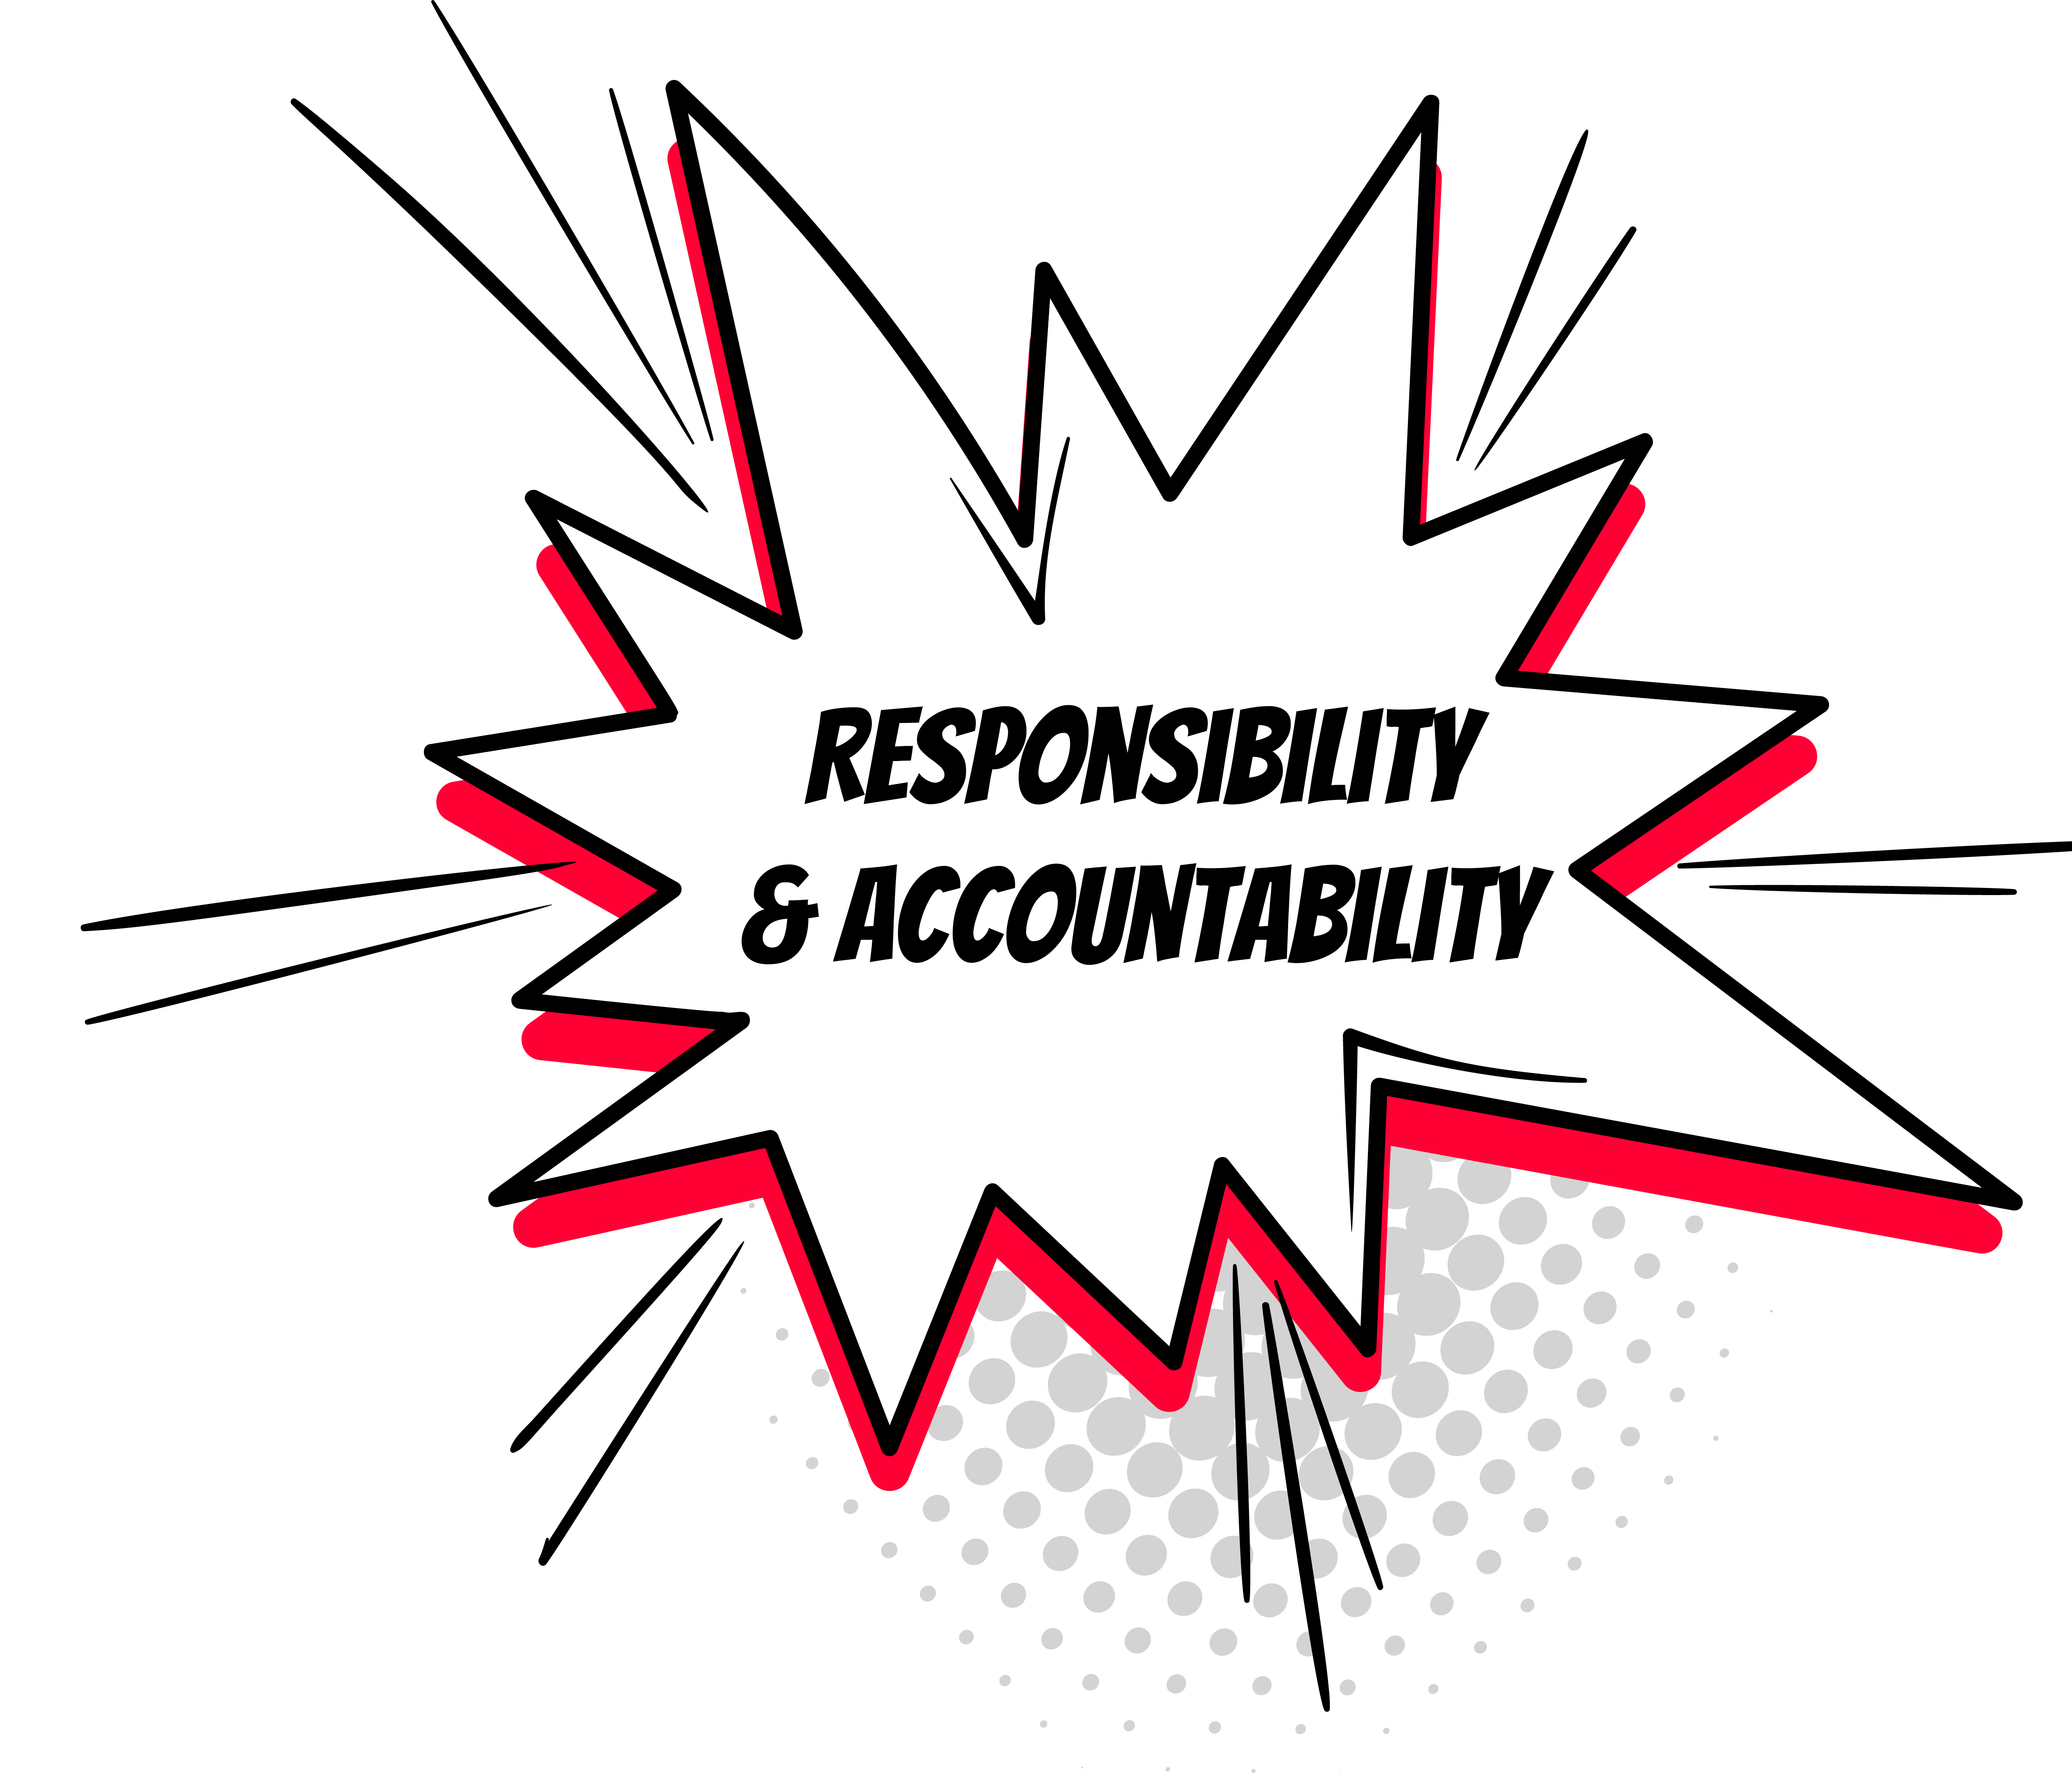 responsibility & accountability